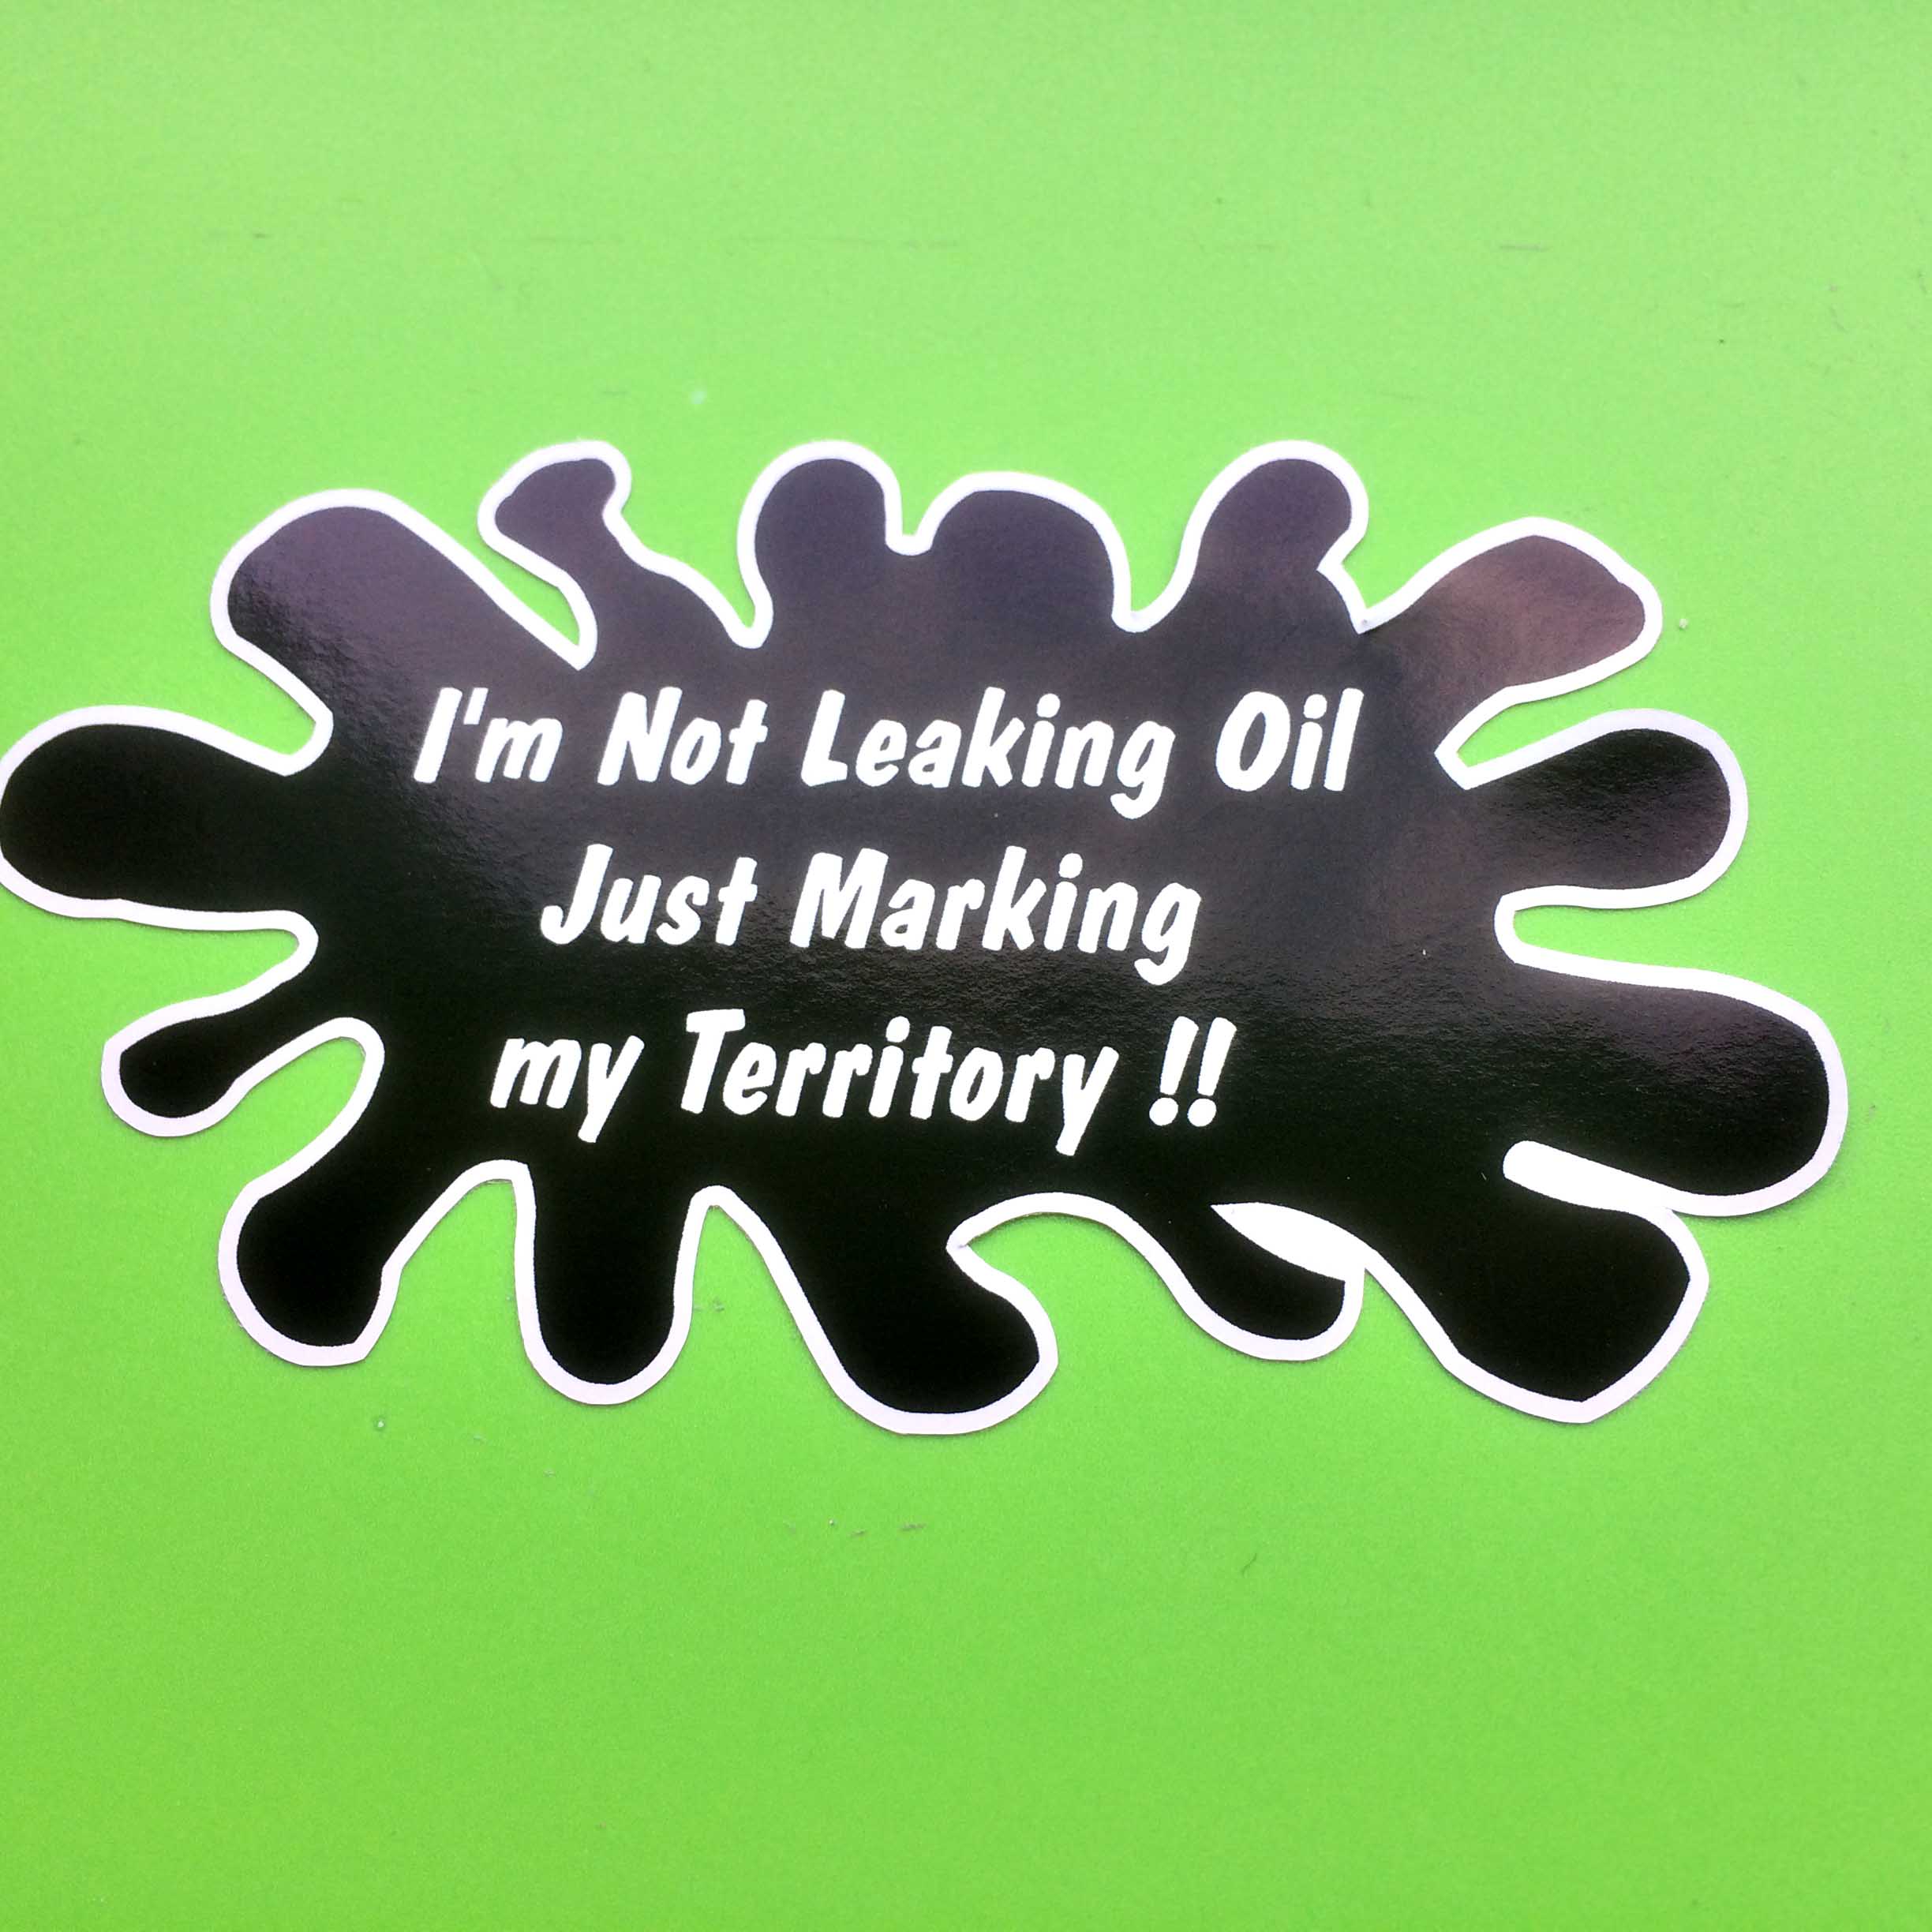 I'M NOT LEAKING OIL STICKER. I'm Not Leaking Oil Just Marking my Territory!! in white lettering on a black oil splat.